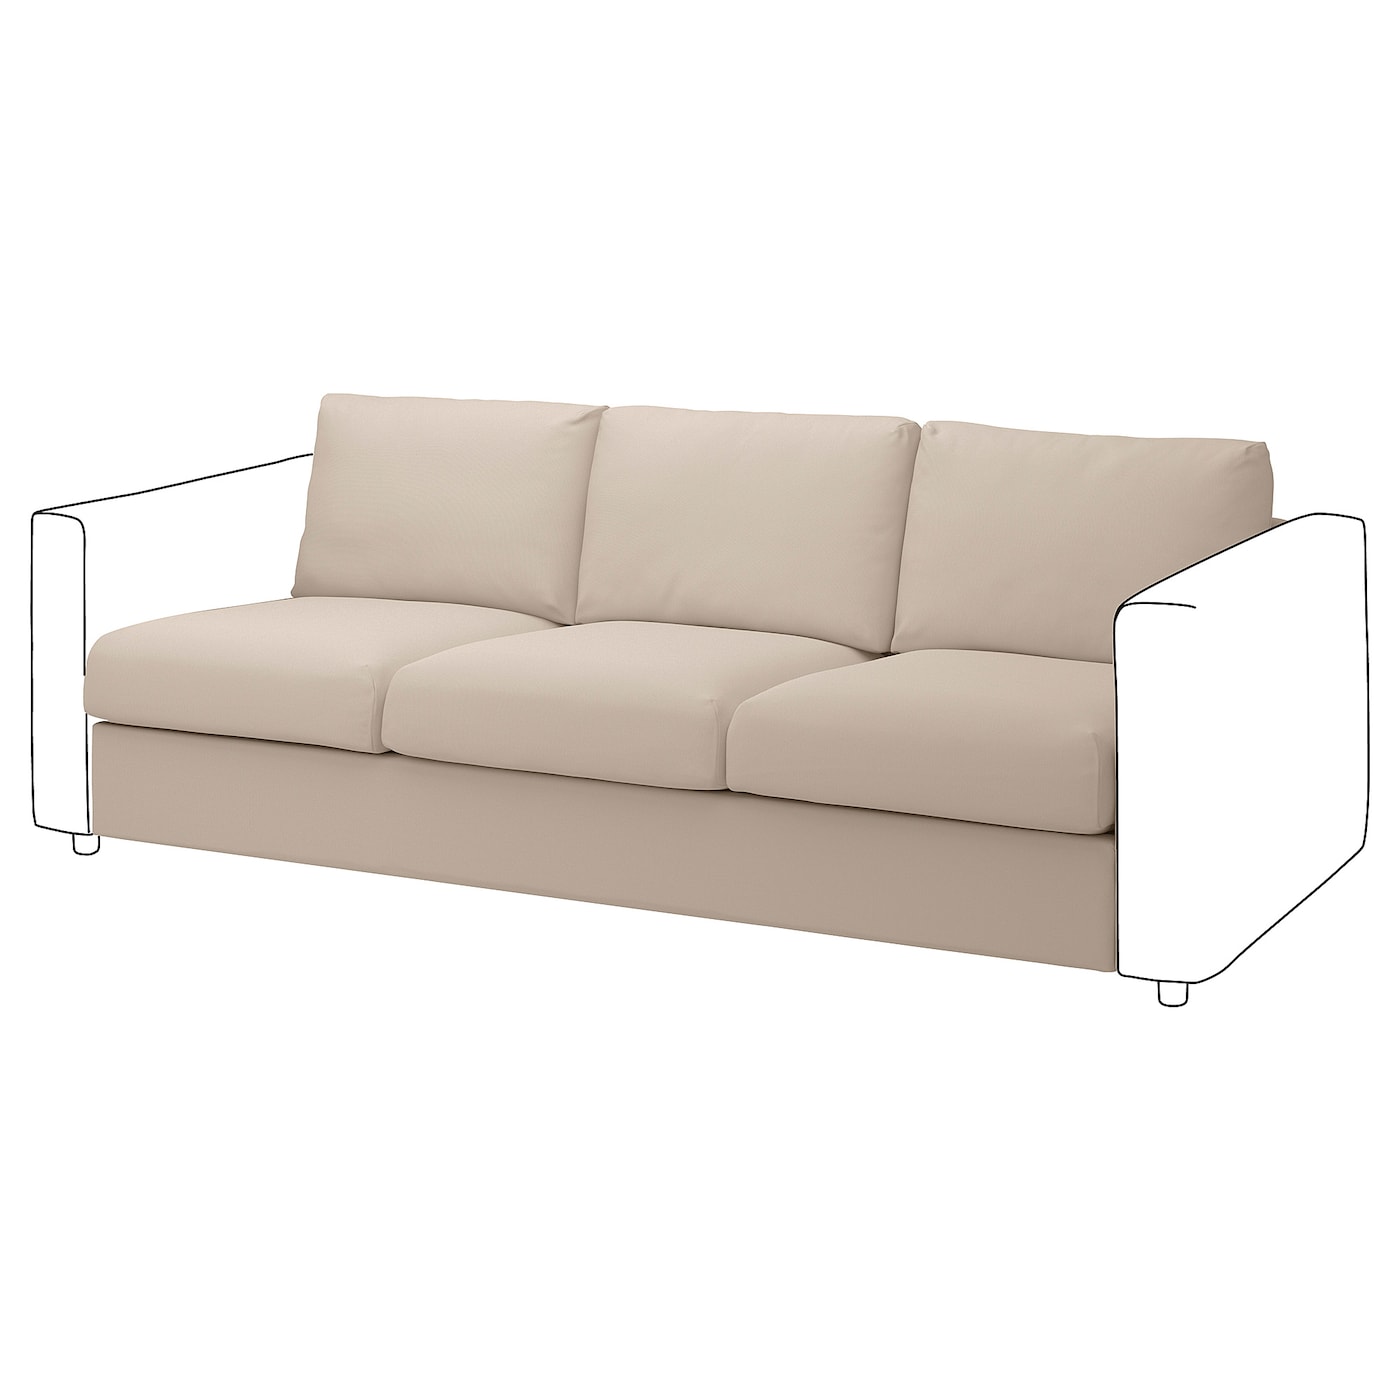 ВИМЛЕ 3-местный диван, Халларп бежевый VIMLE IKEA